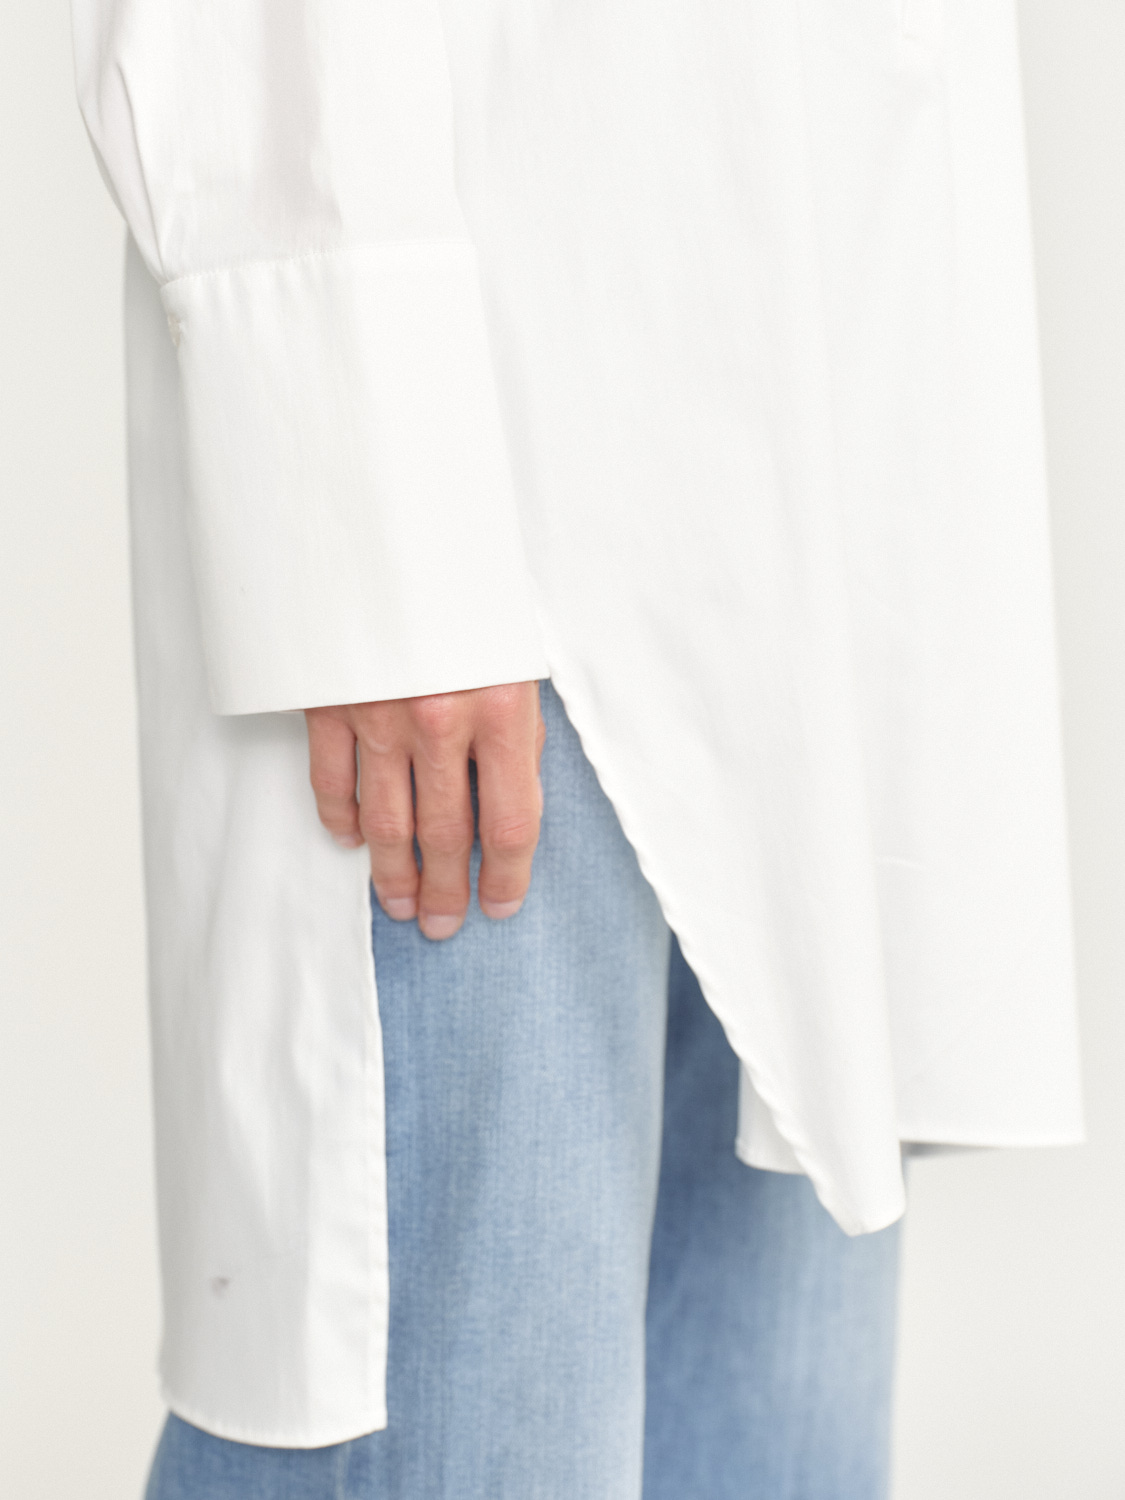 Eva Mann Margit – long blouse with half button placket   white 40